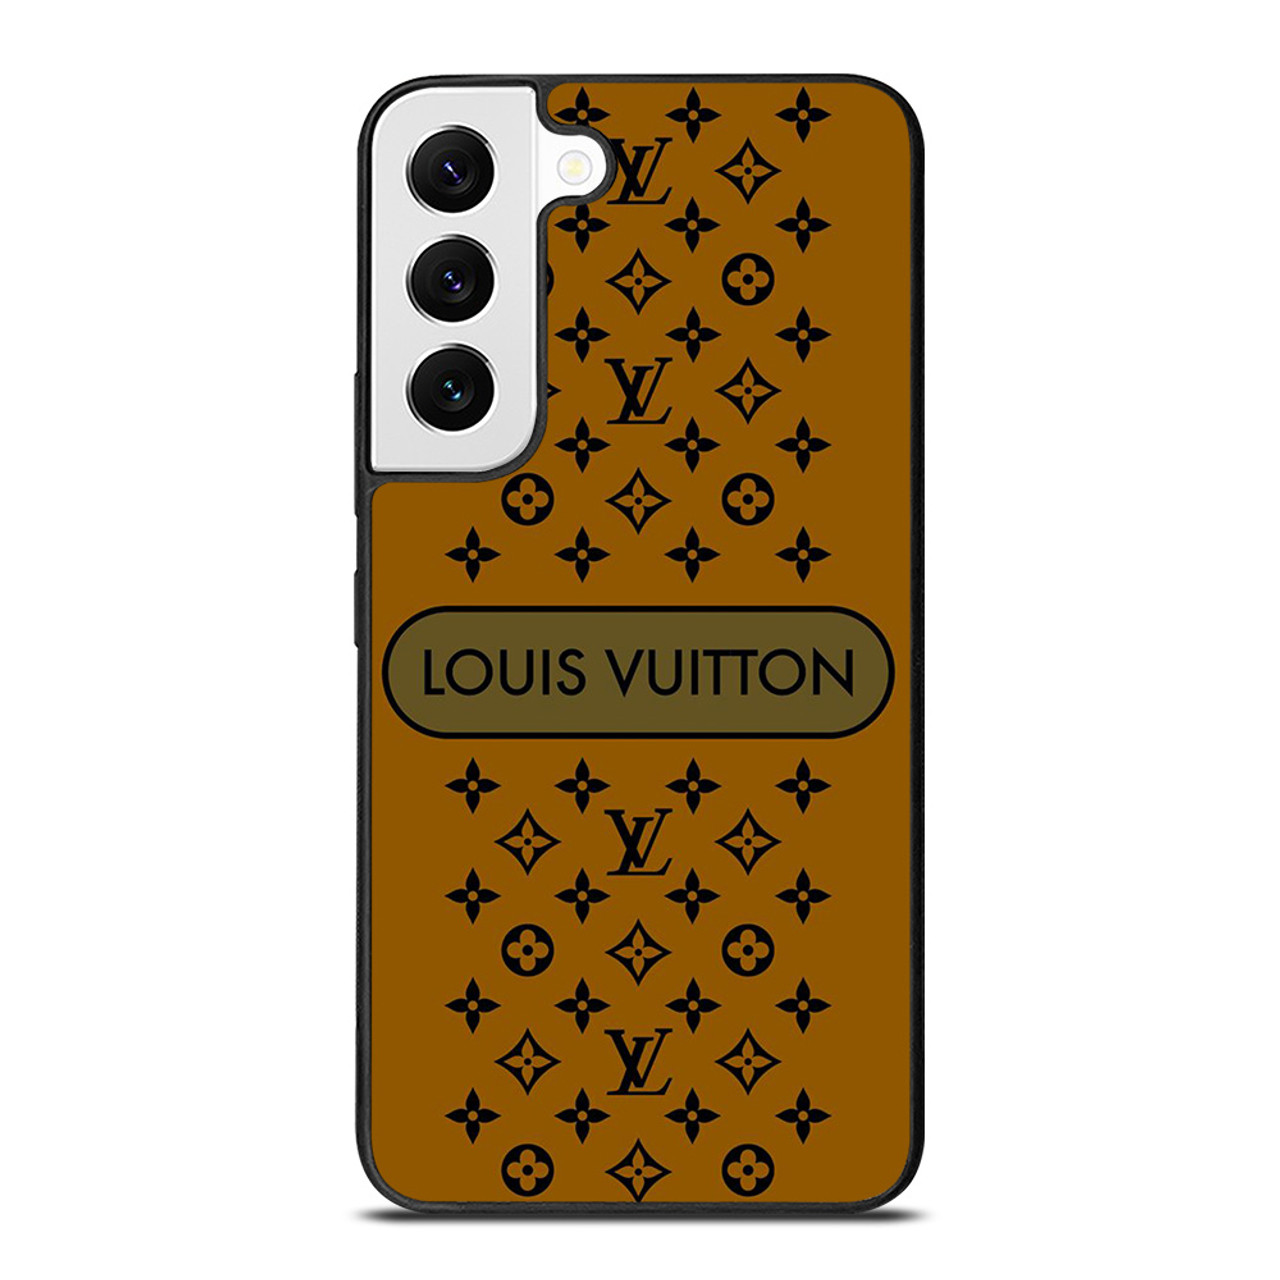 LOUIS VUITTON PATTERN LV LOGO ICON GOLD Samsung Galaxy S22 Case Cover